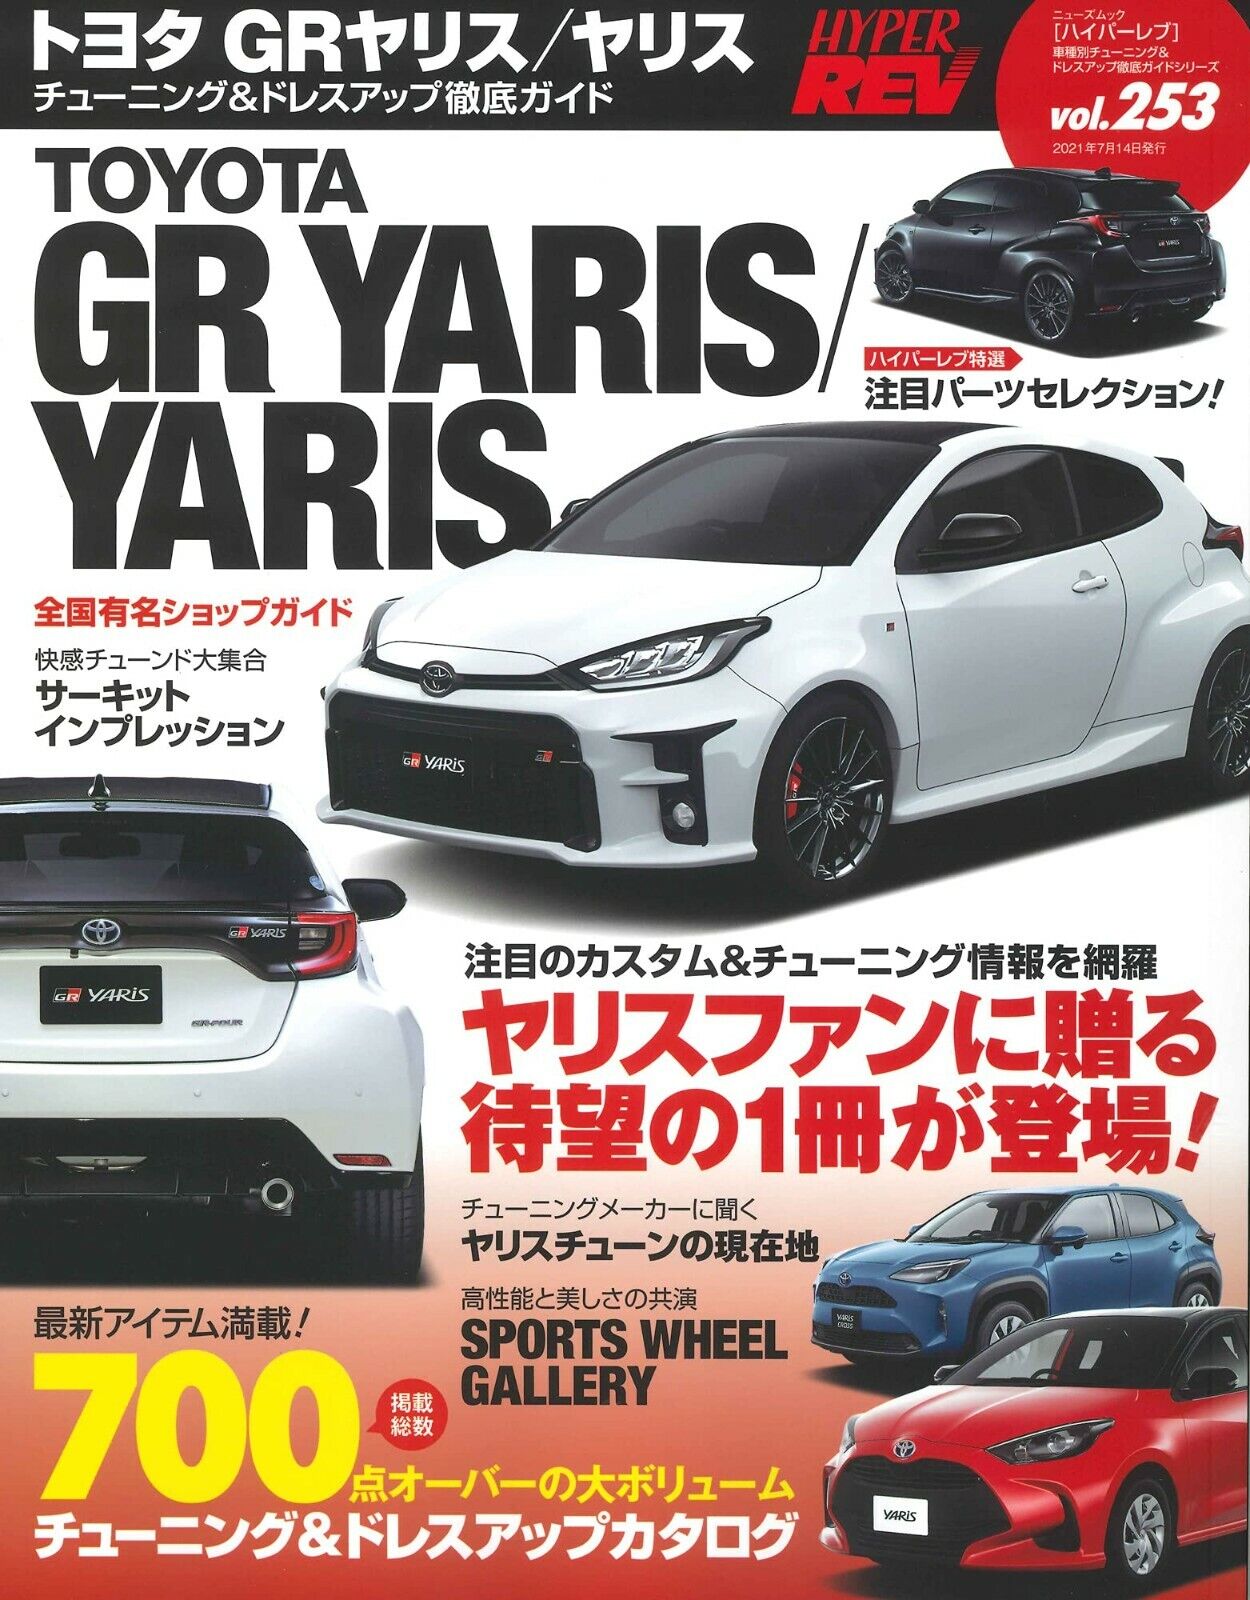 HYPER REV TOYOTA GR YARIS / YARIS | Car Tuning & Dress Up Book JAPAN